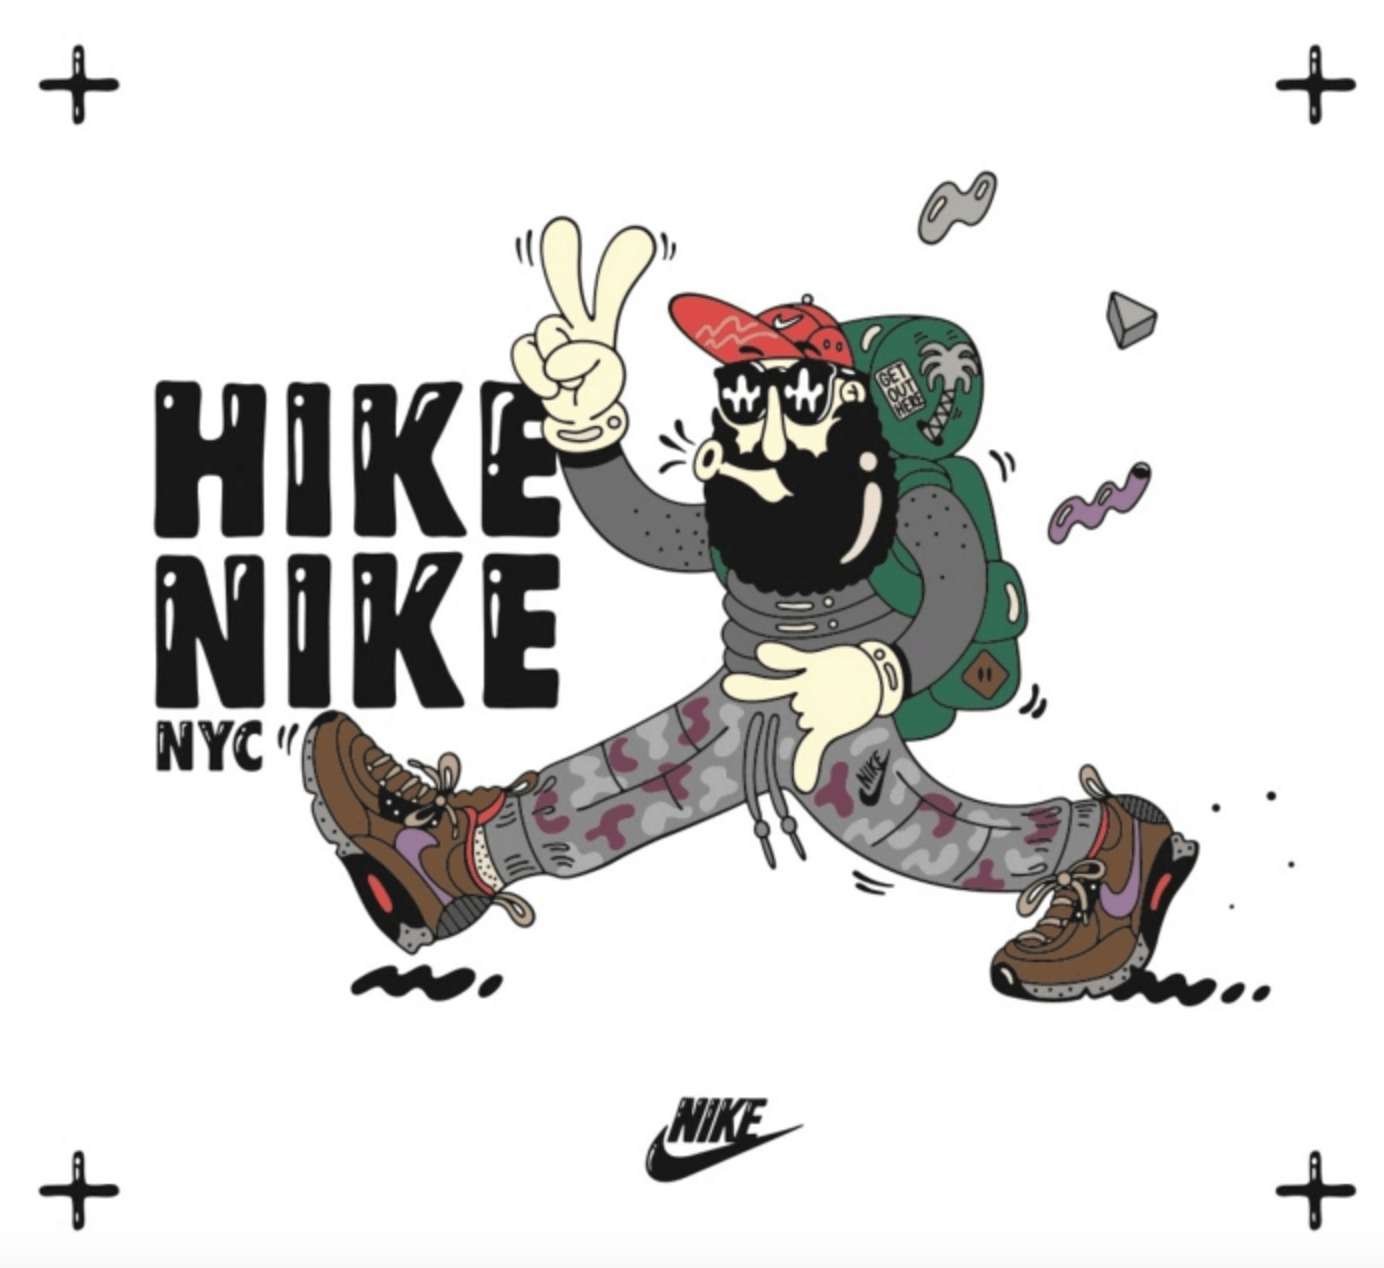 Hike Nike NYC: Pop Up Art for Fall 